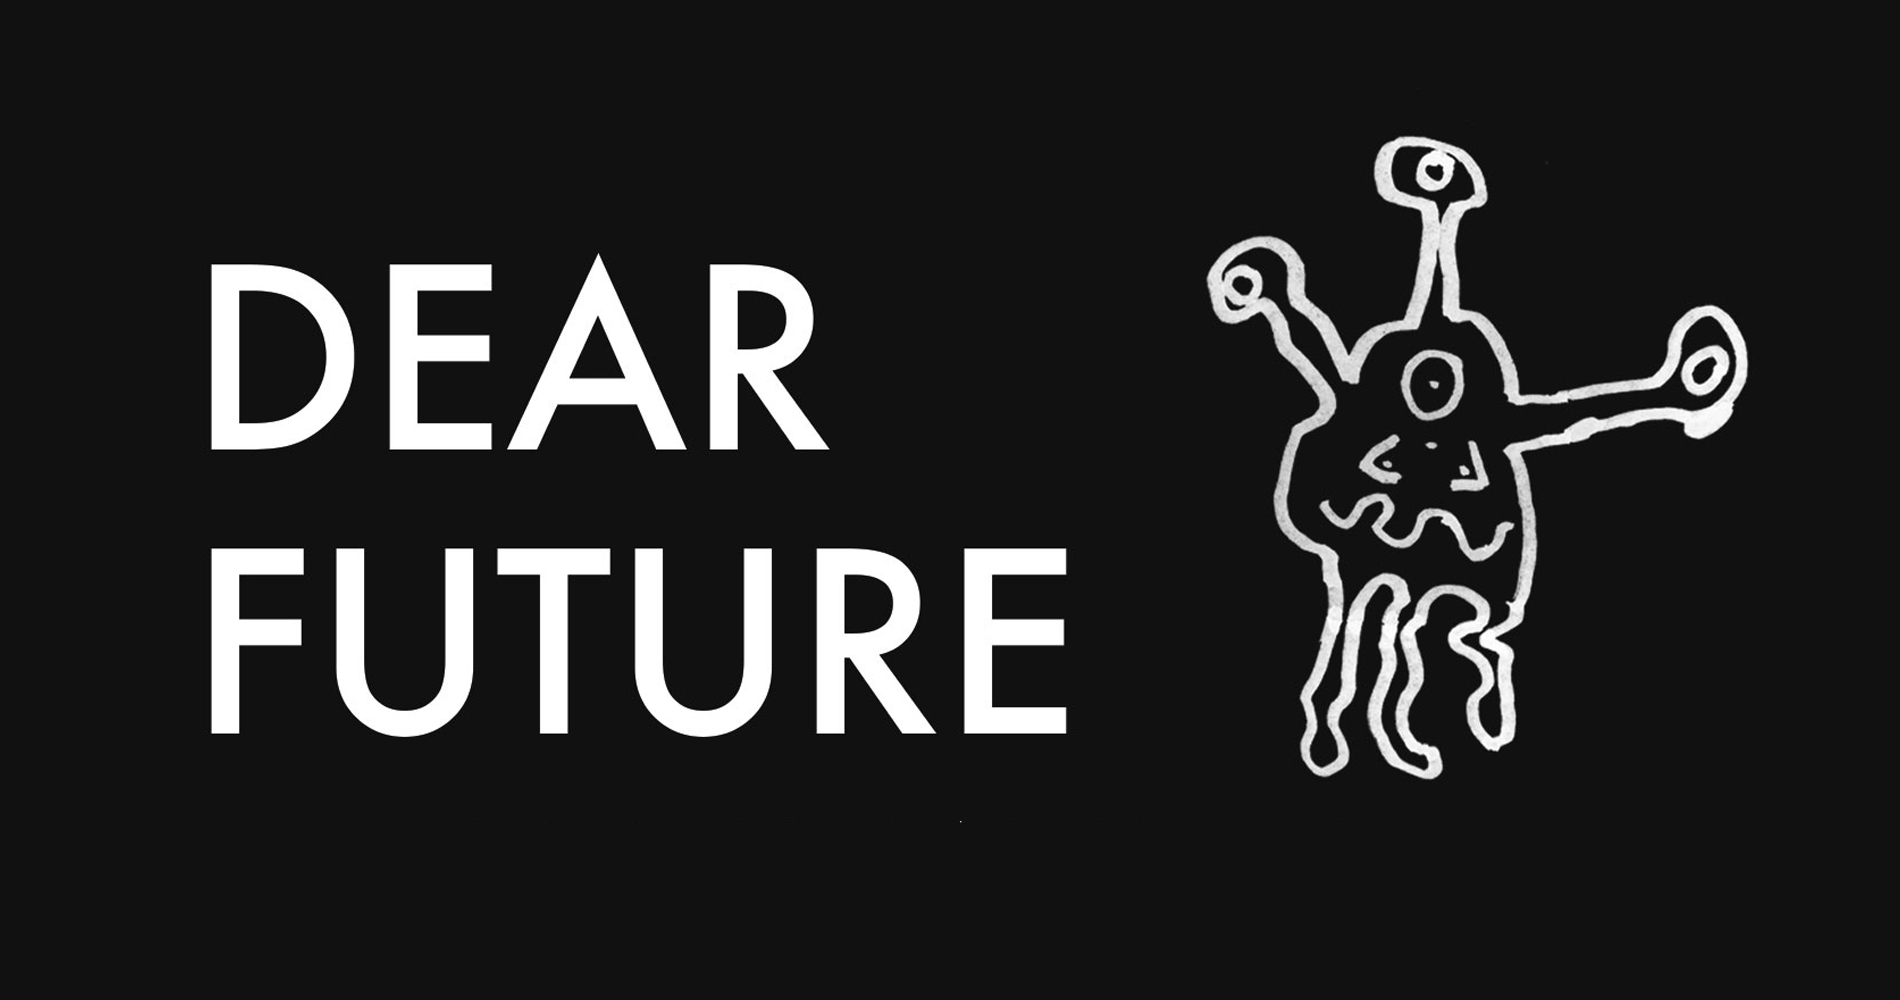 Dear Future logo with illustration of a mini alien